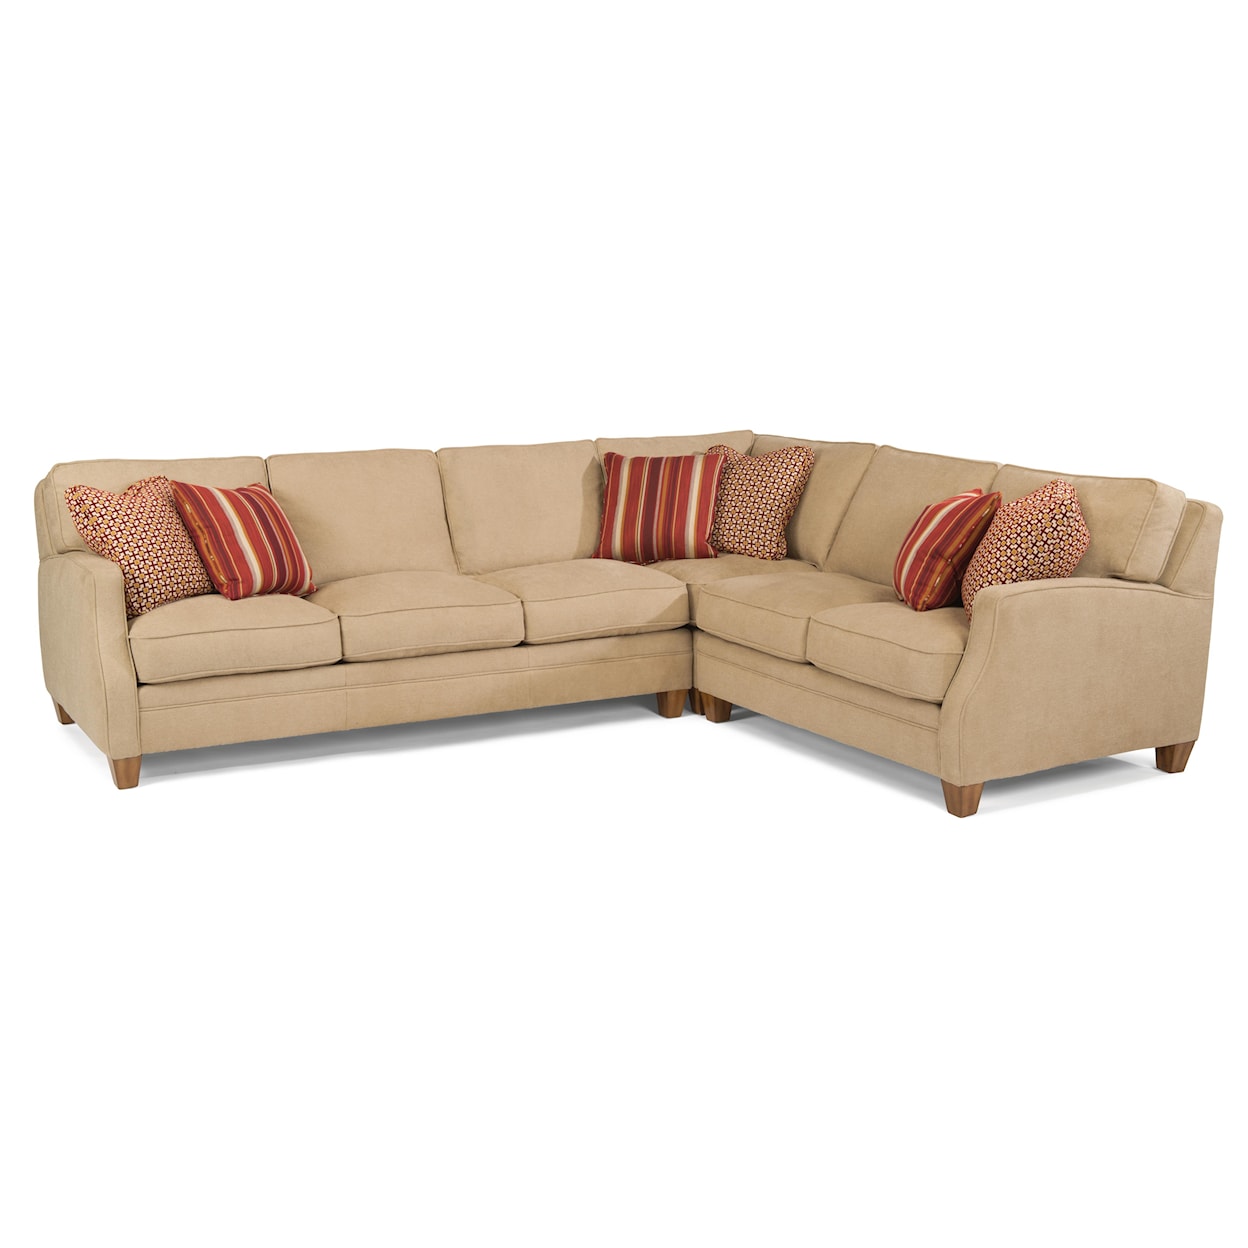 Flexsteel Lennox 3 Pc Sectional Sofa